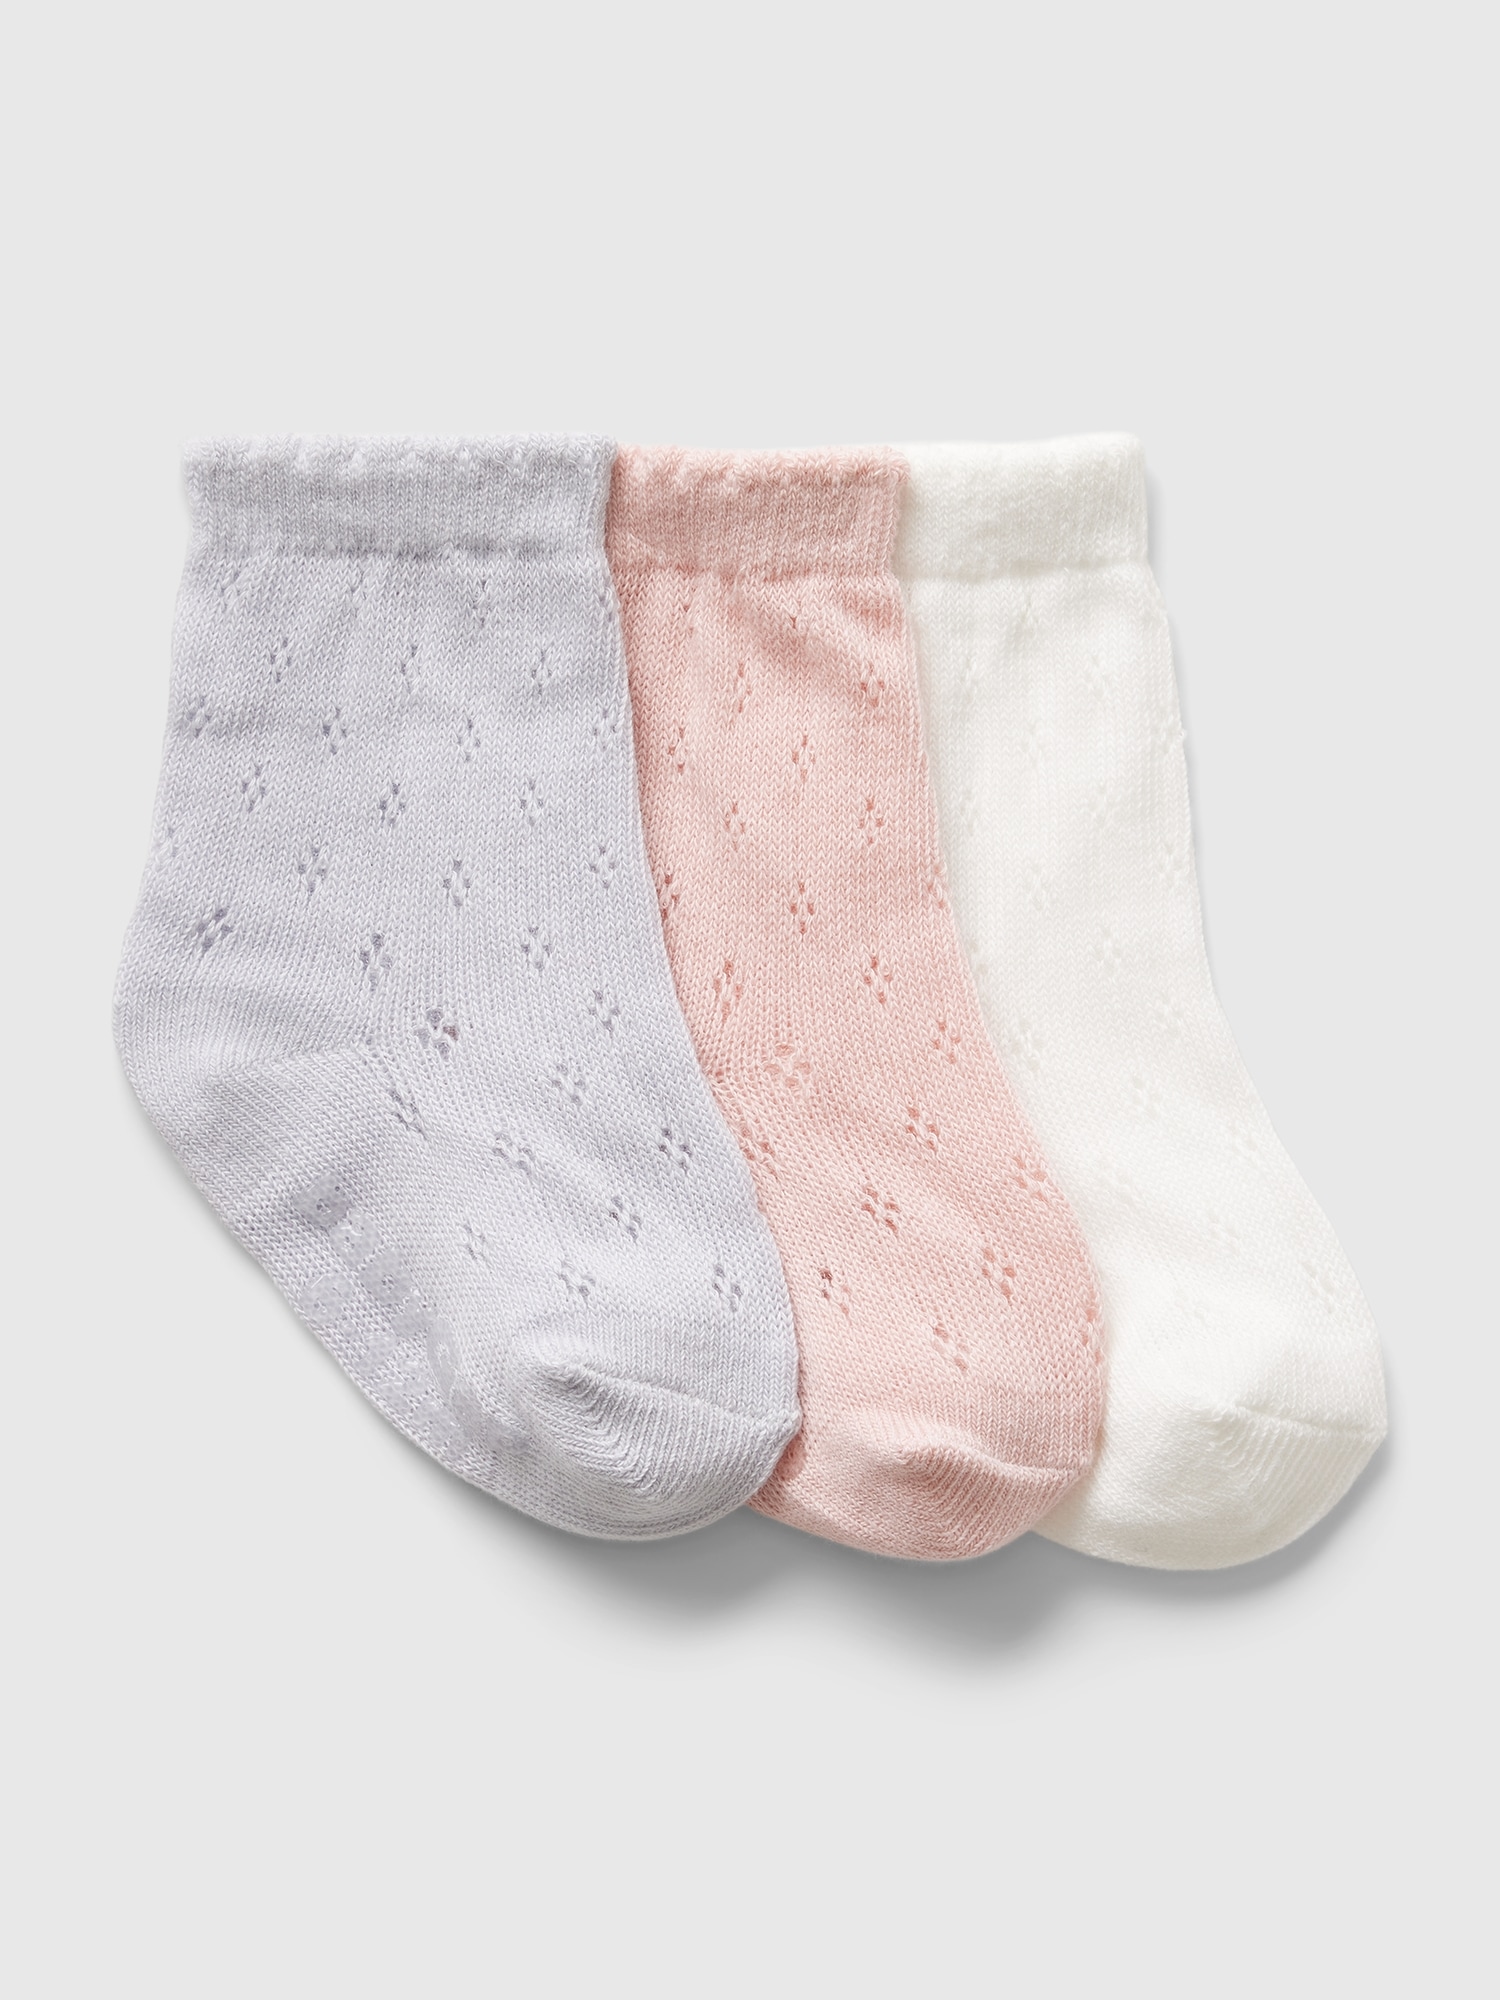 Baby First Favorites Crew Socks (3-Pack)